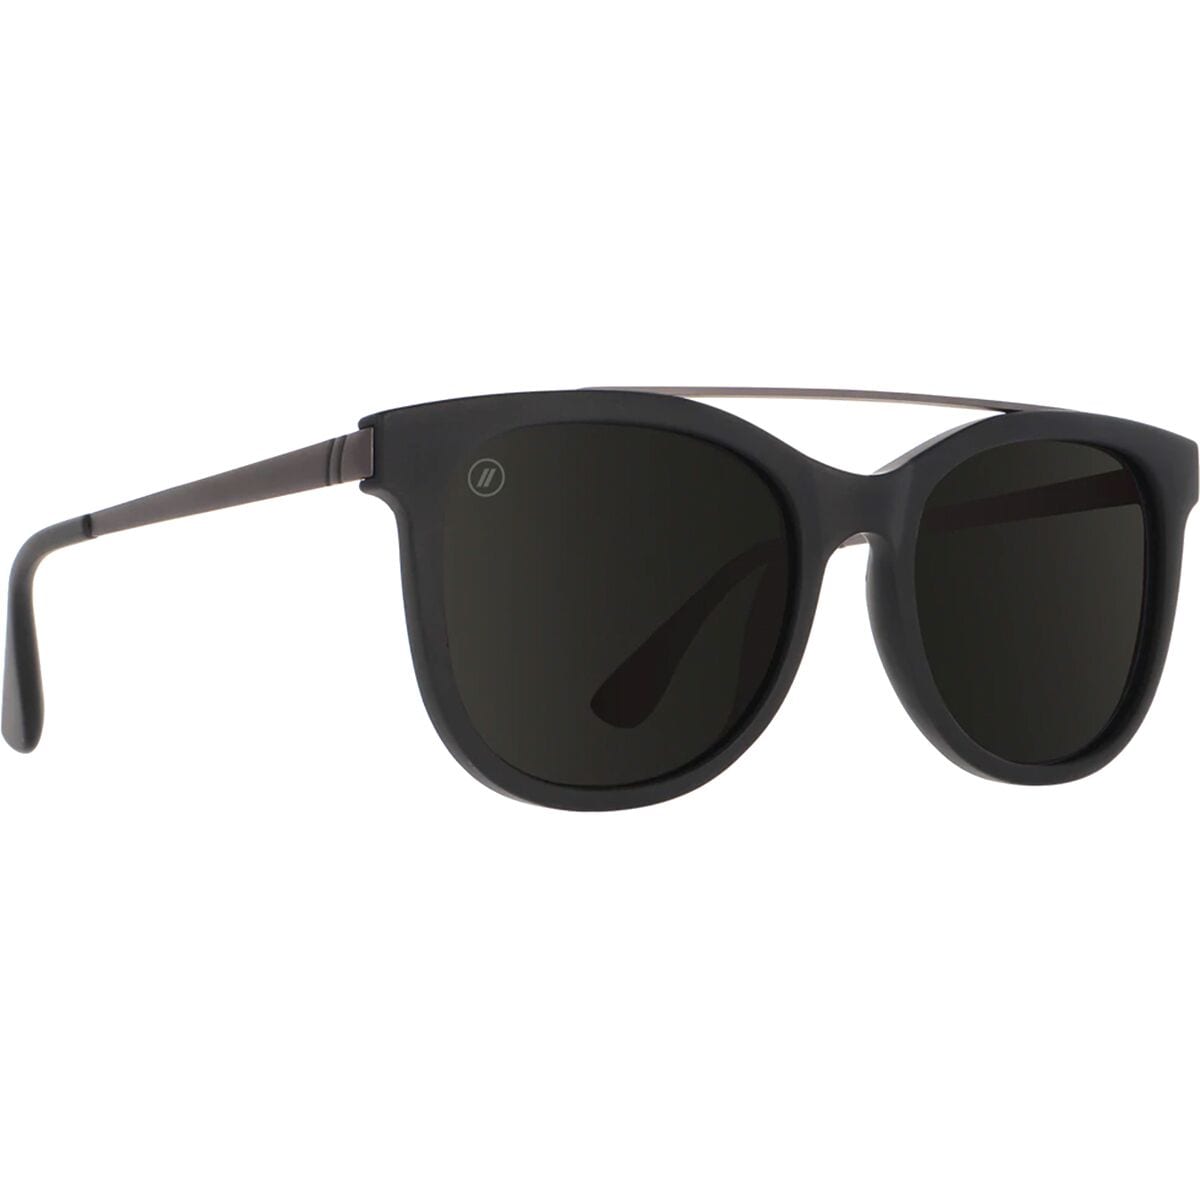 Blenders Eyewear Bling Moon Black Smoke Balboa Polarized Sunglasses